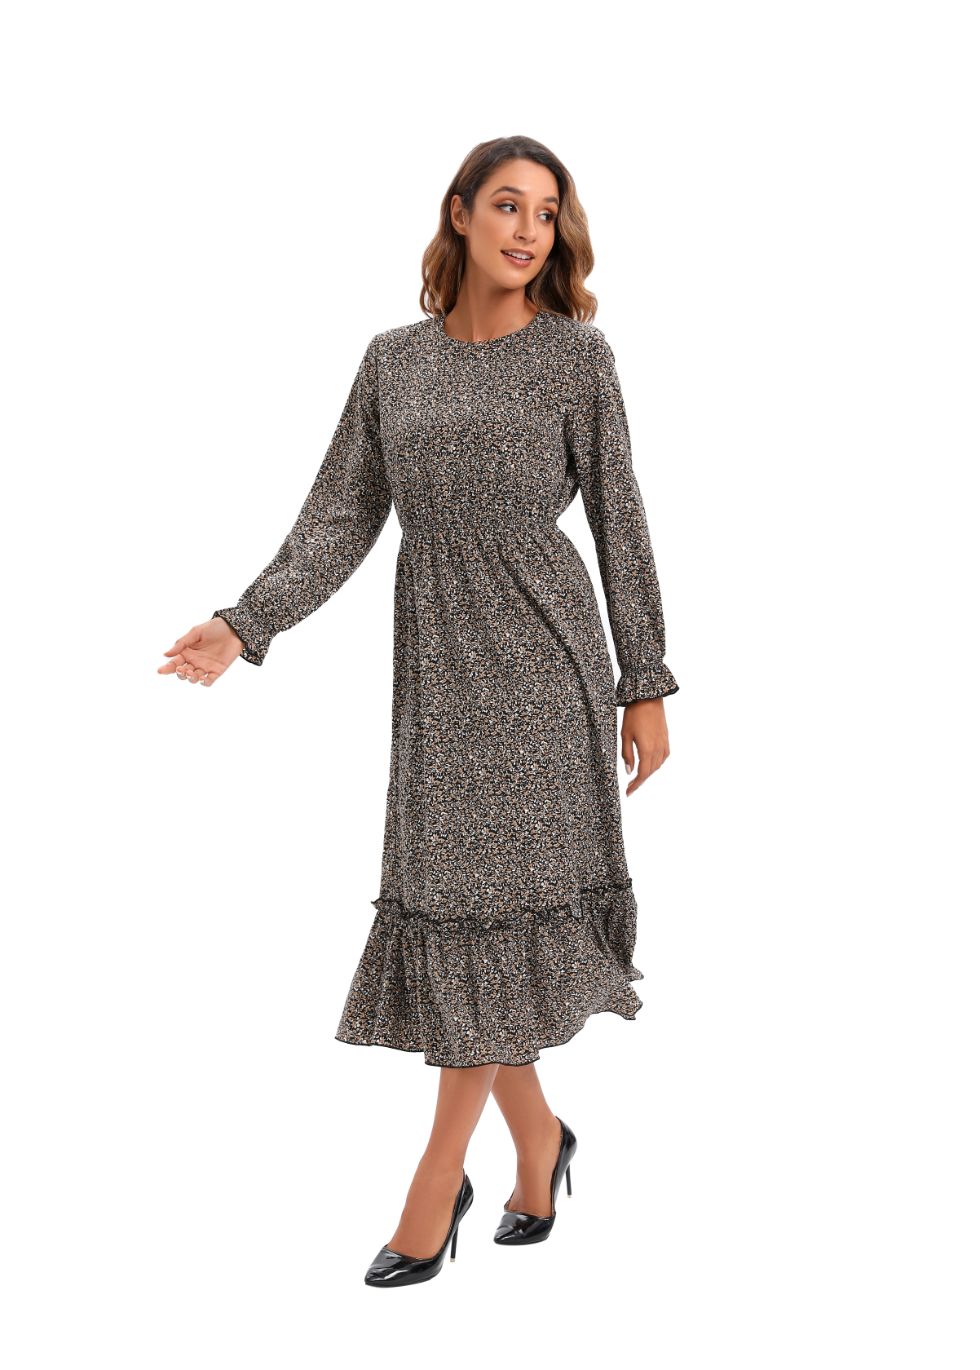 Elegant Modest Long Sleeve Print Dress - figaliciousfood